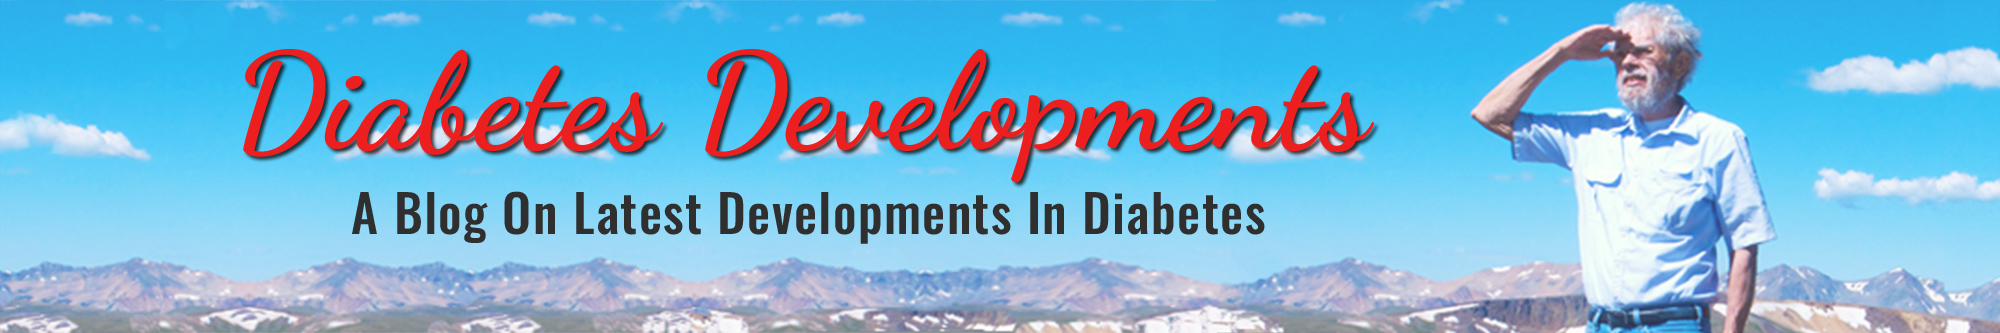 Diabetes Developments